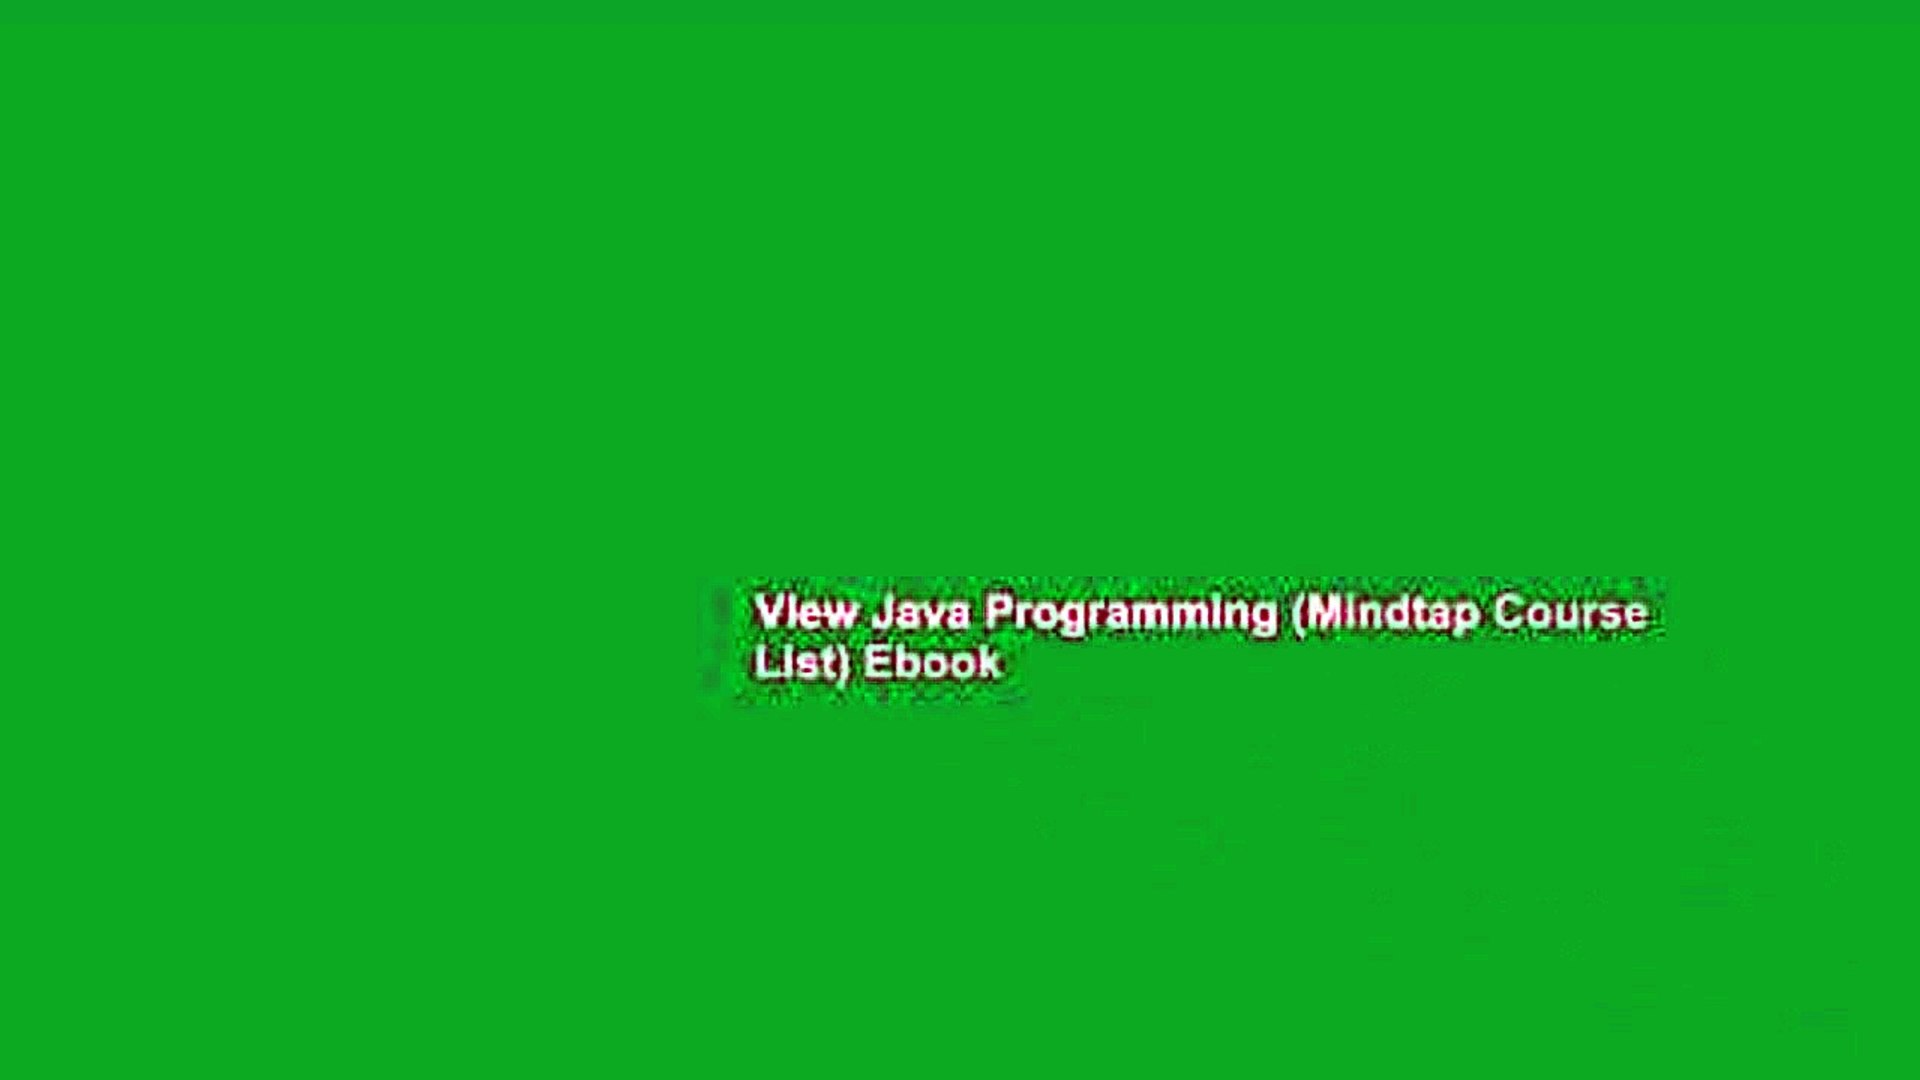 View Java Programming (Mindtap Course List) Ebook